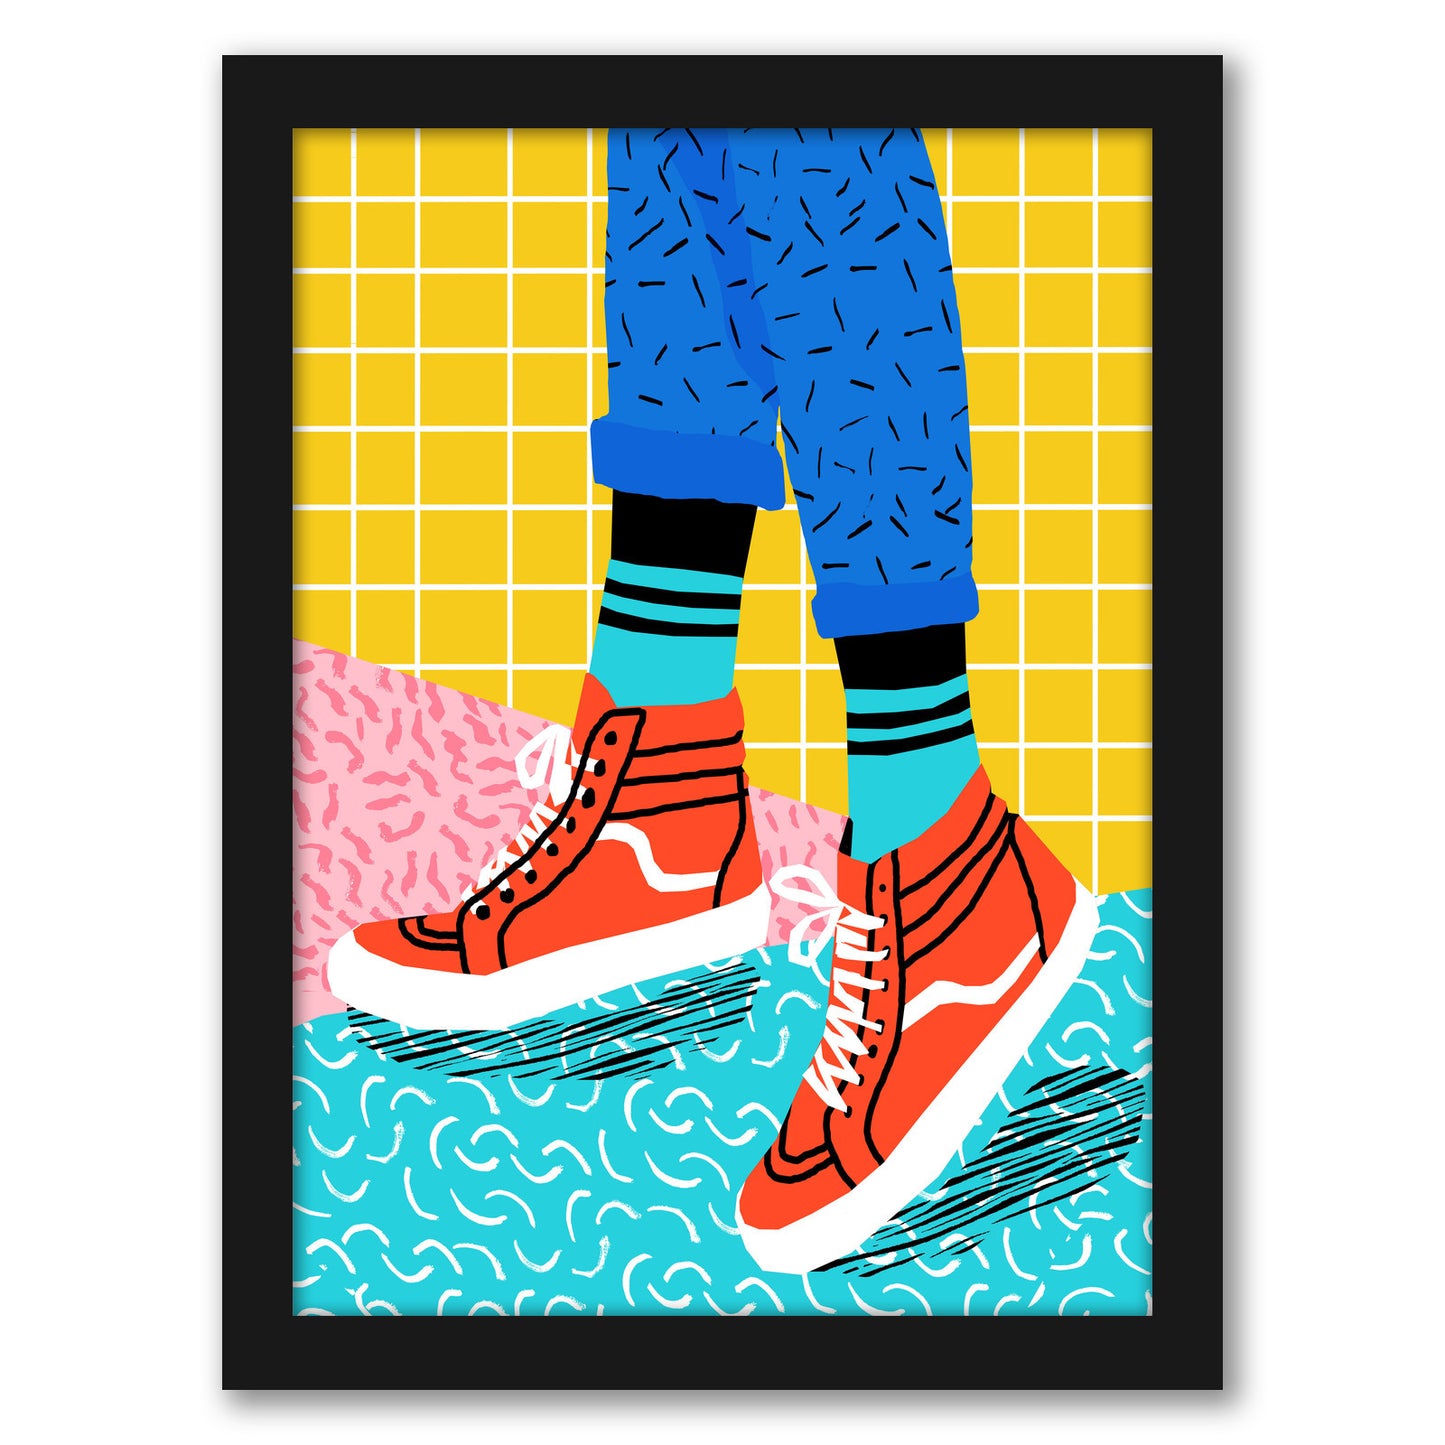 Toe Drag by Wacka Designs - Framed Print